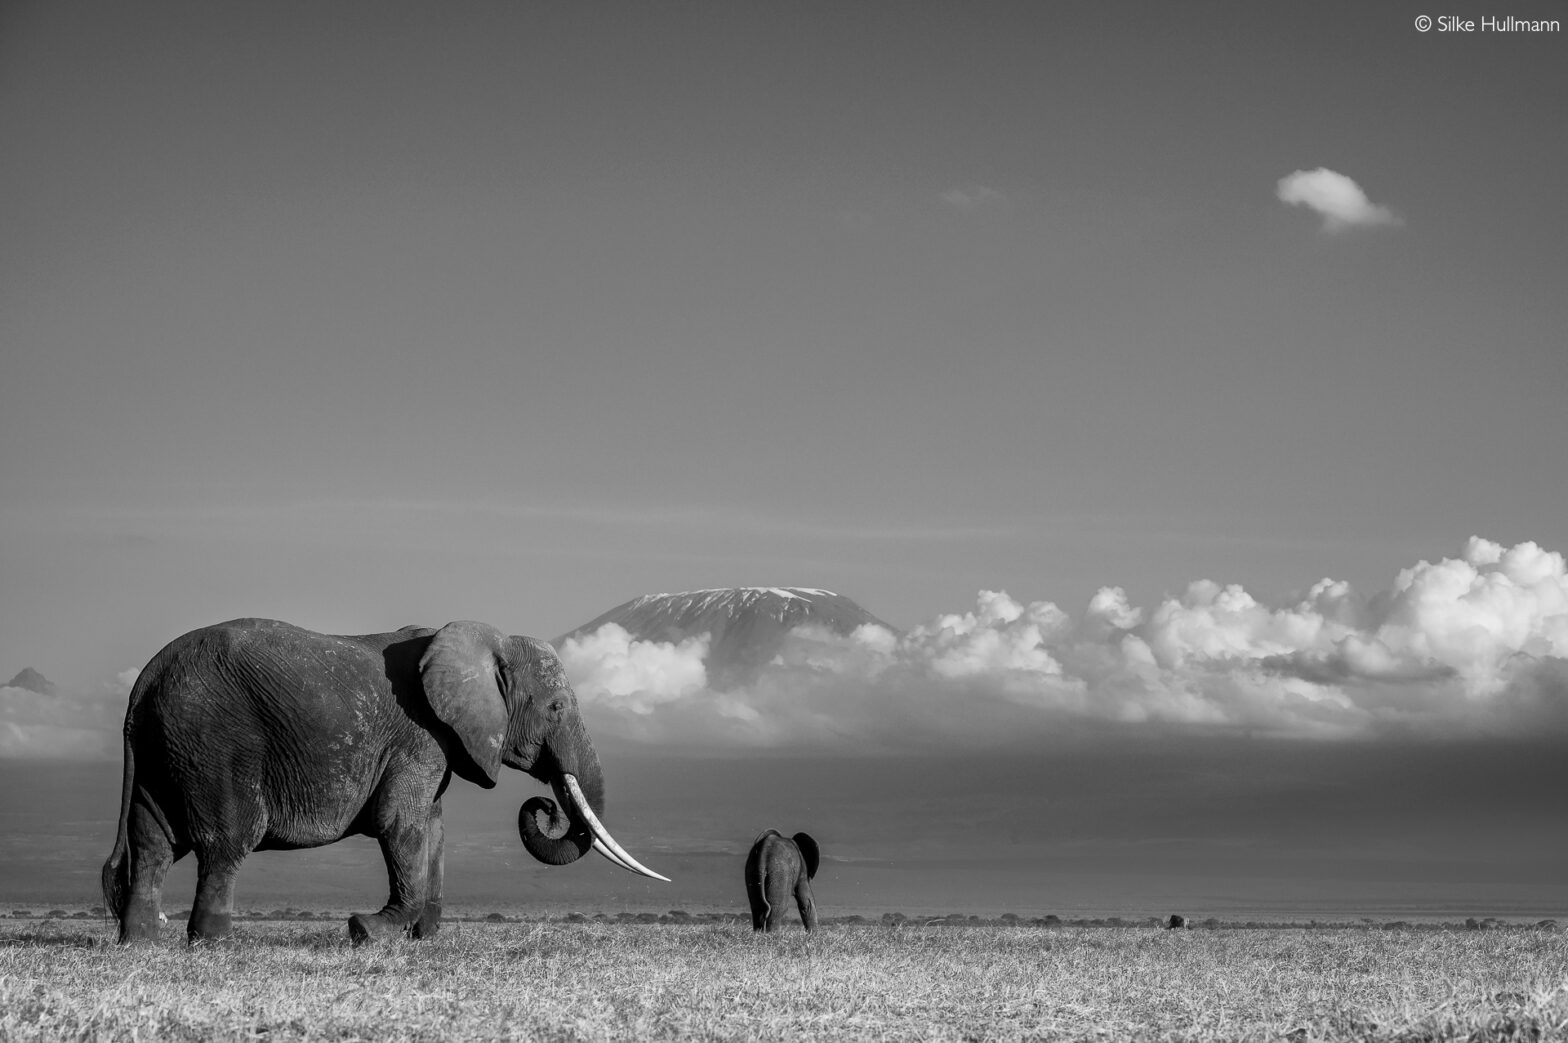 Trophy hunters kill two of Africa's biggest elephants in Botswana